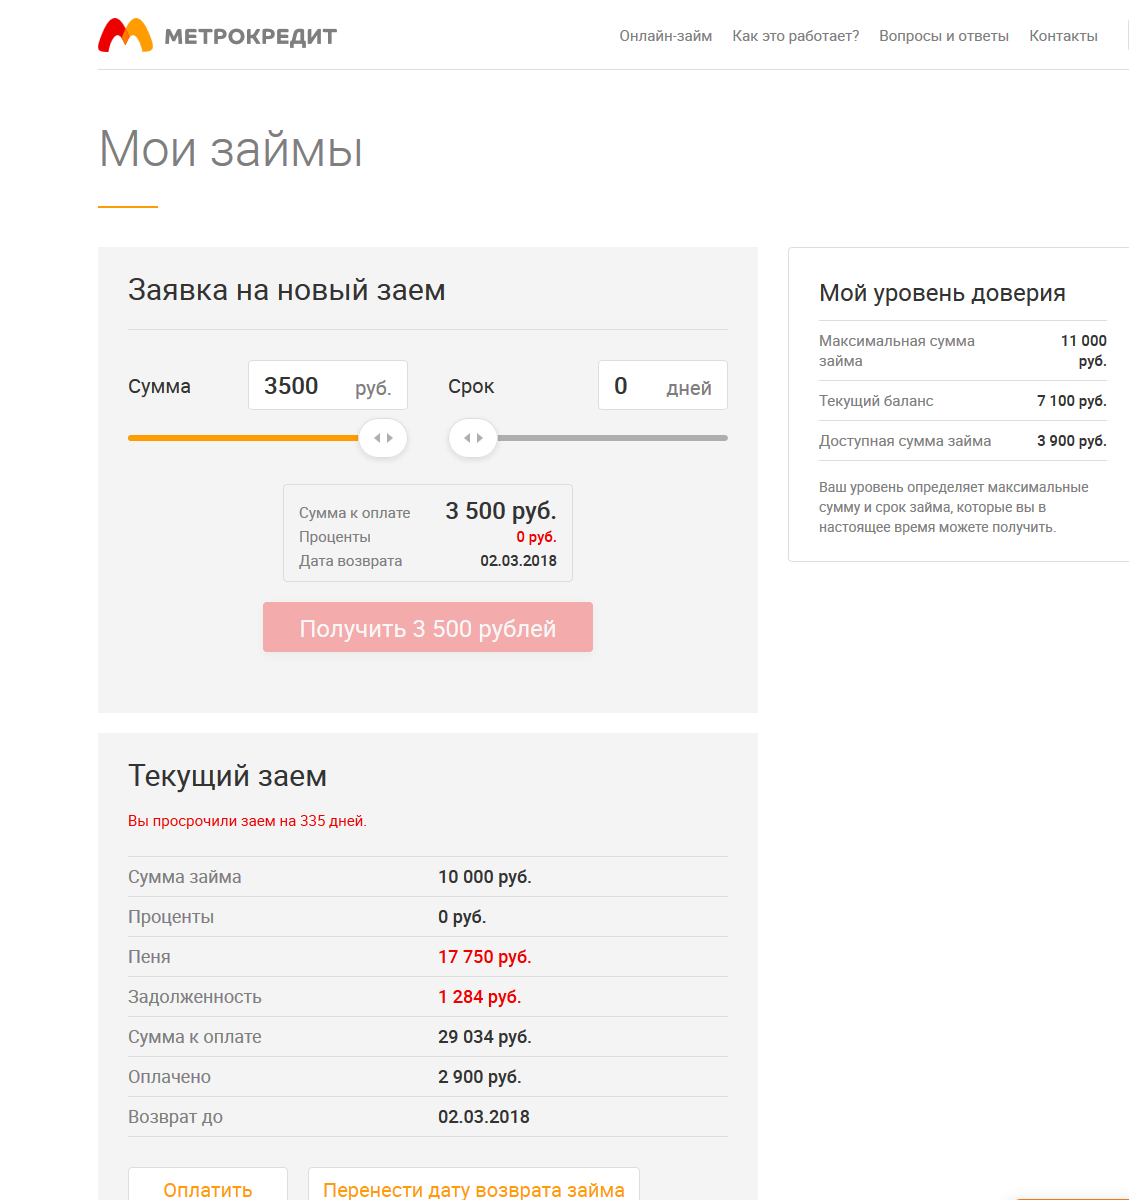 Screenshot1_ Мои займы Metrokredit ru.png